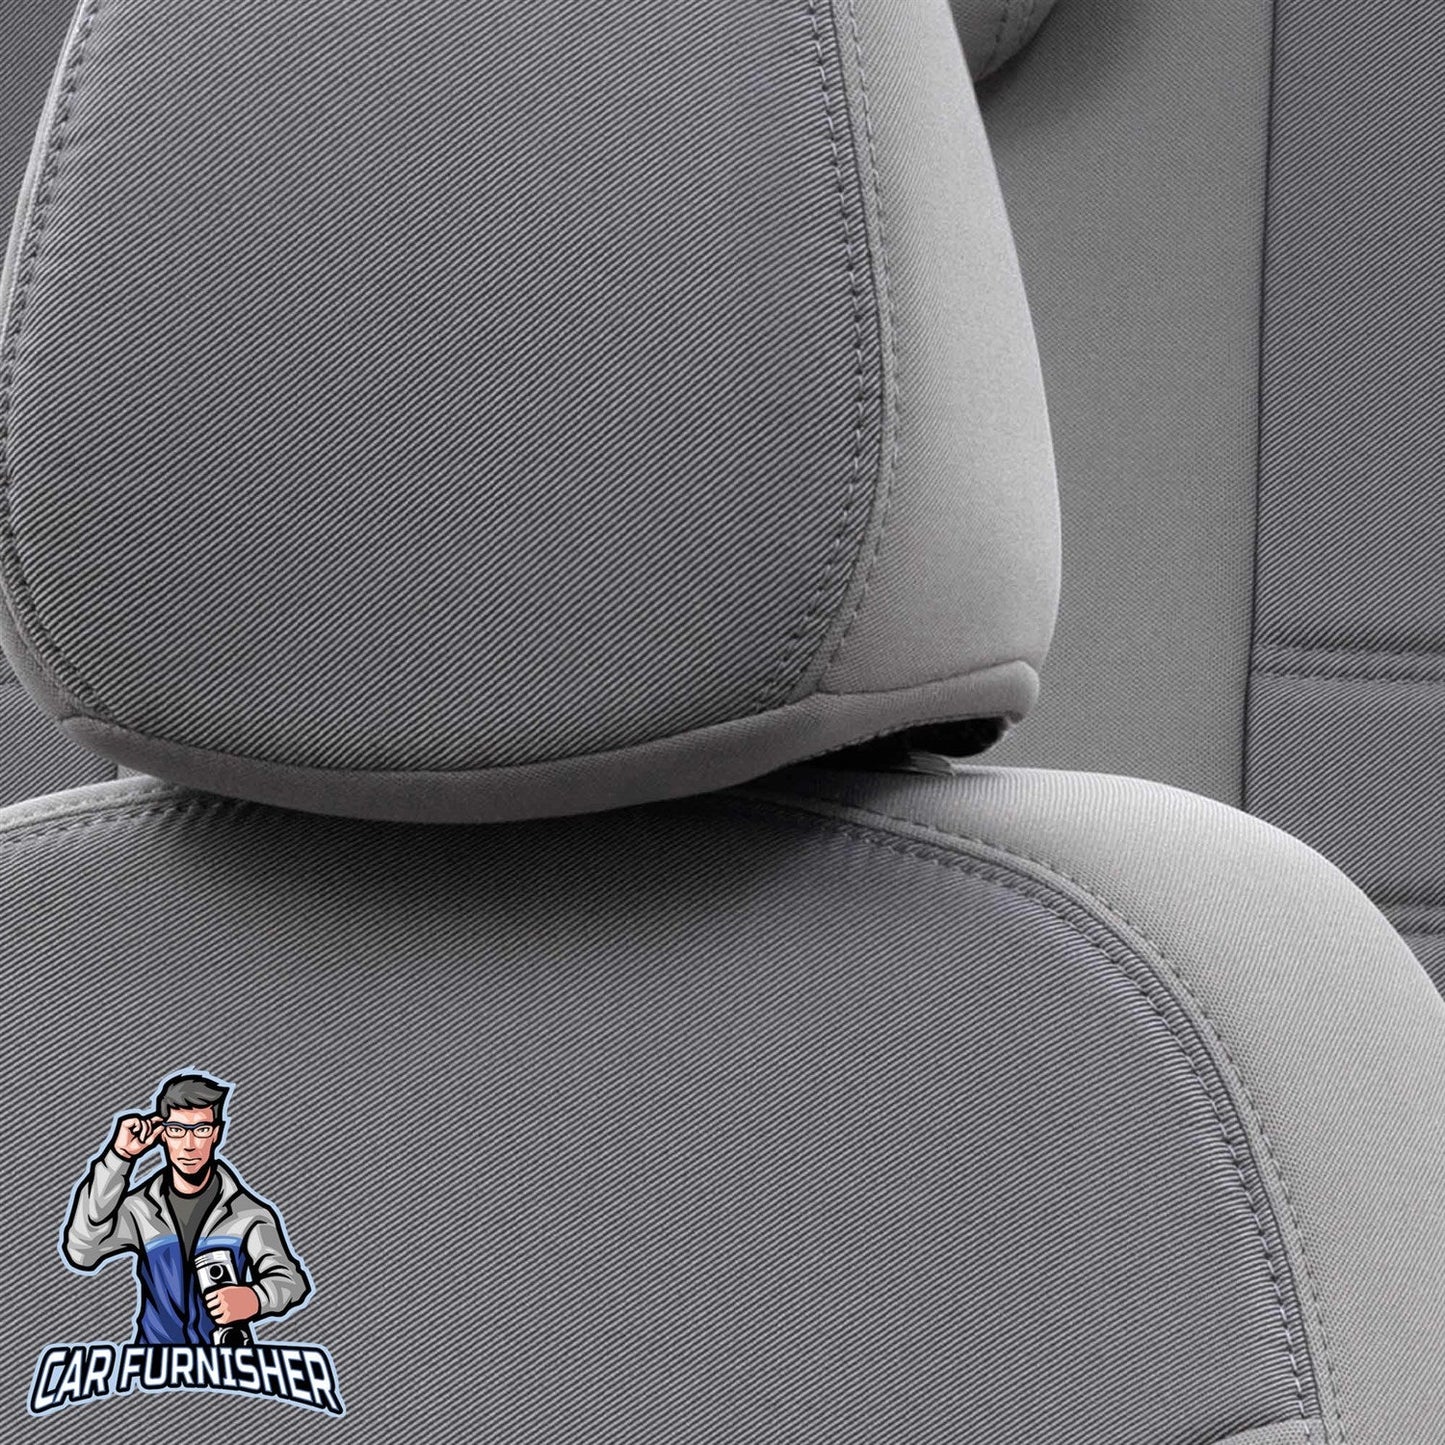 Isuzu NPR Seat Covers Original Jacquard Design Gray Jacquard Fabric